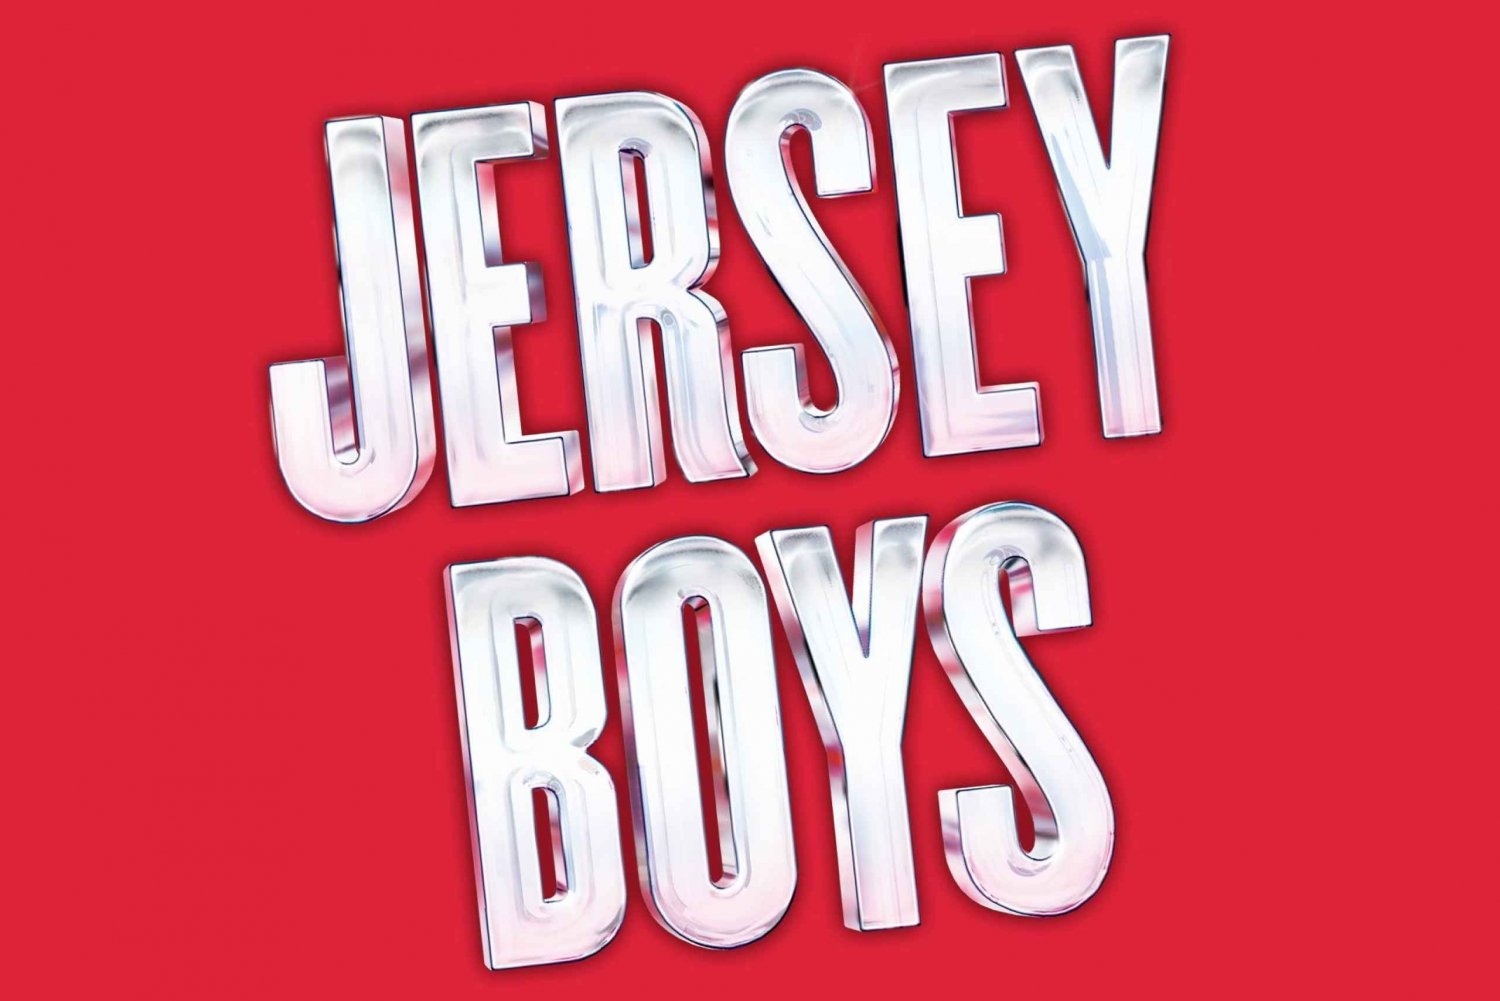 Las Vegas: Jersey Boys Musical en The Orleans